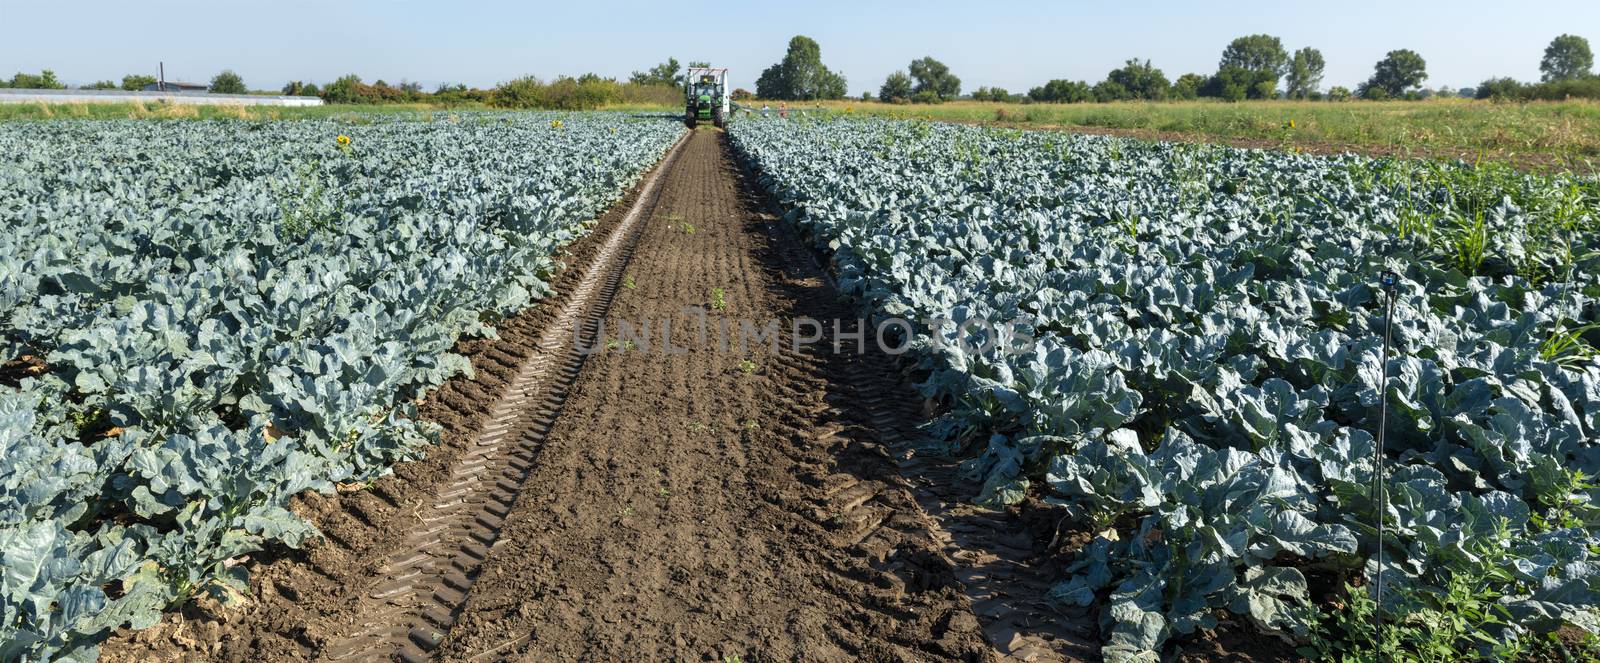 Tractor in broccoli farmland. Big broccoli plantation. Concept for growing broccoli. Sunny day. Traces of tractor tires